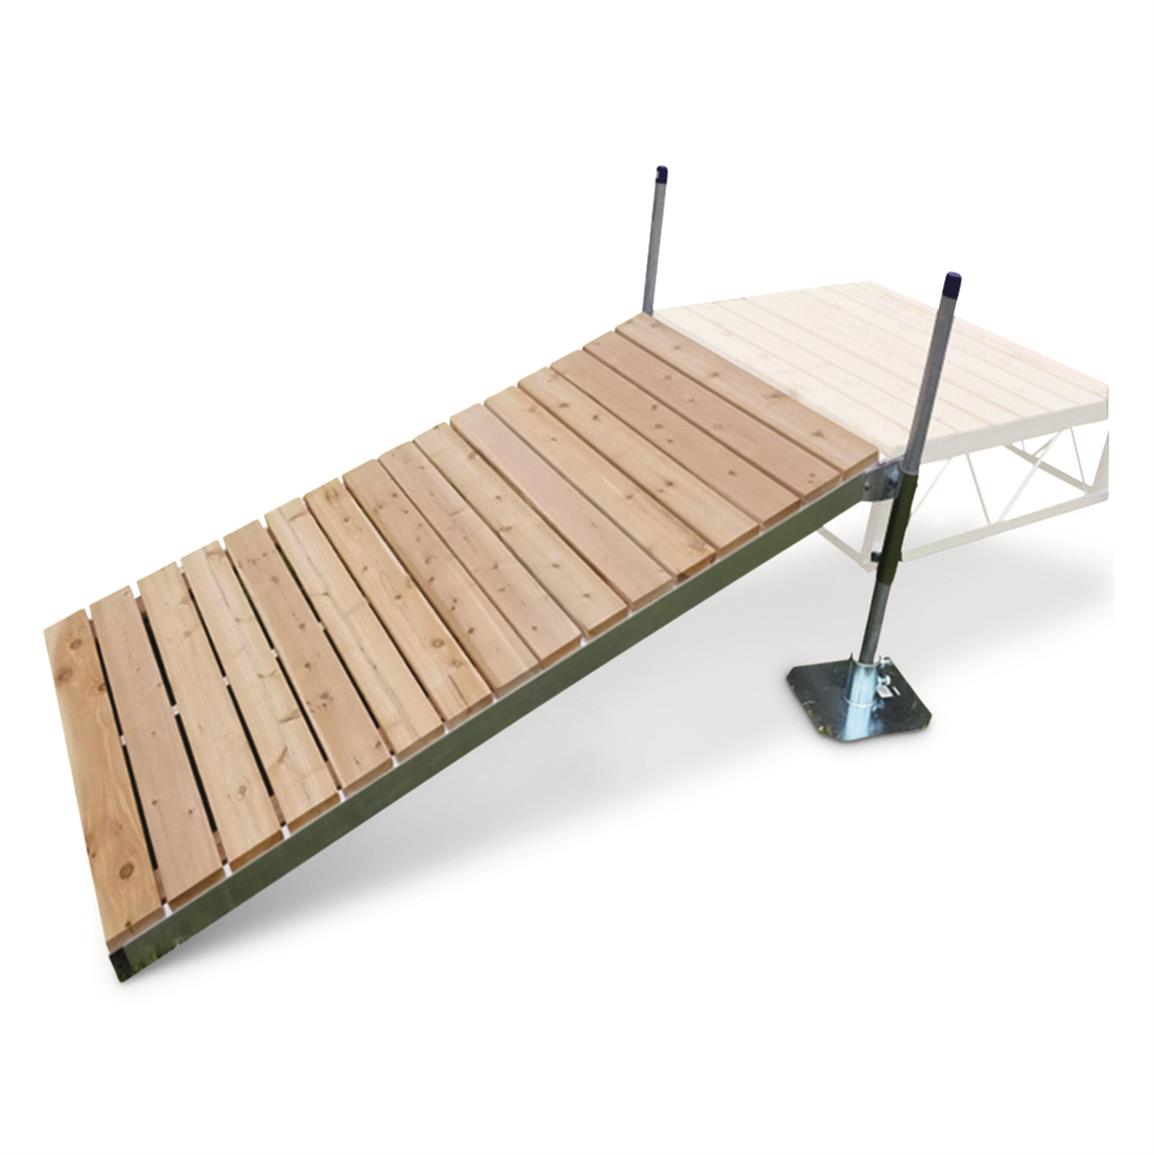 Patriot Docks 4'x8' Shore Ramp Kit with Cedar Deck